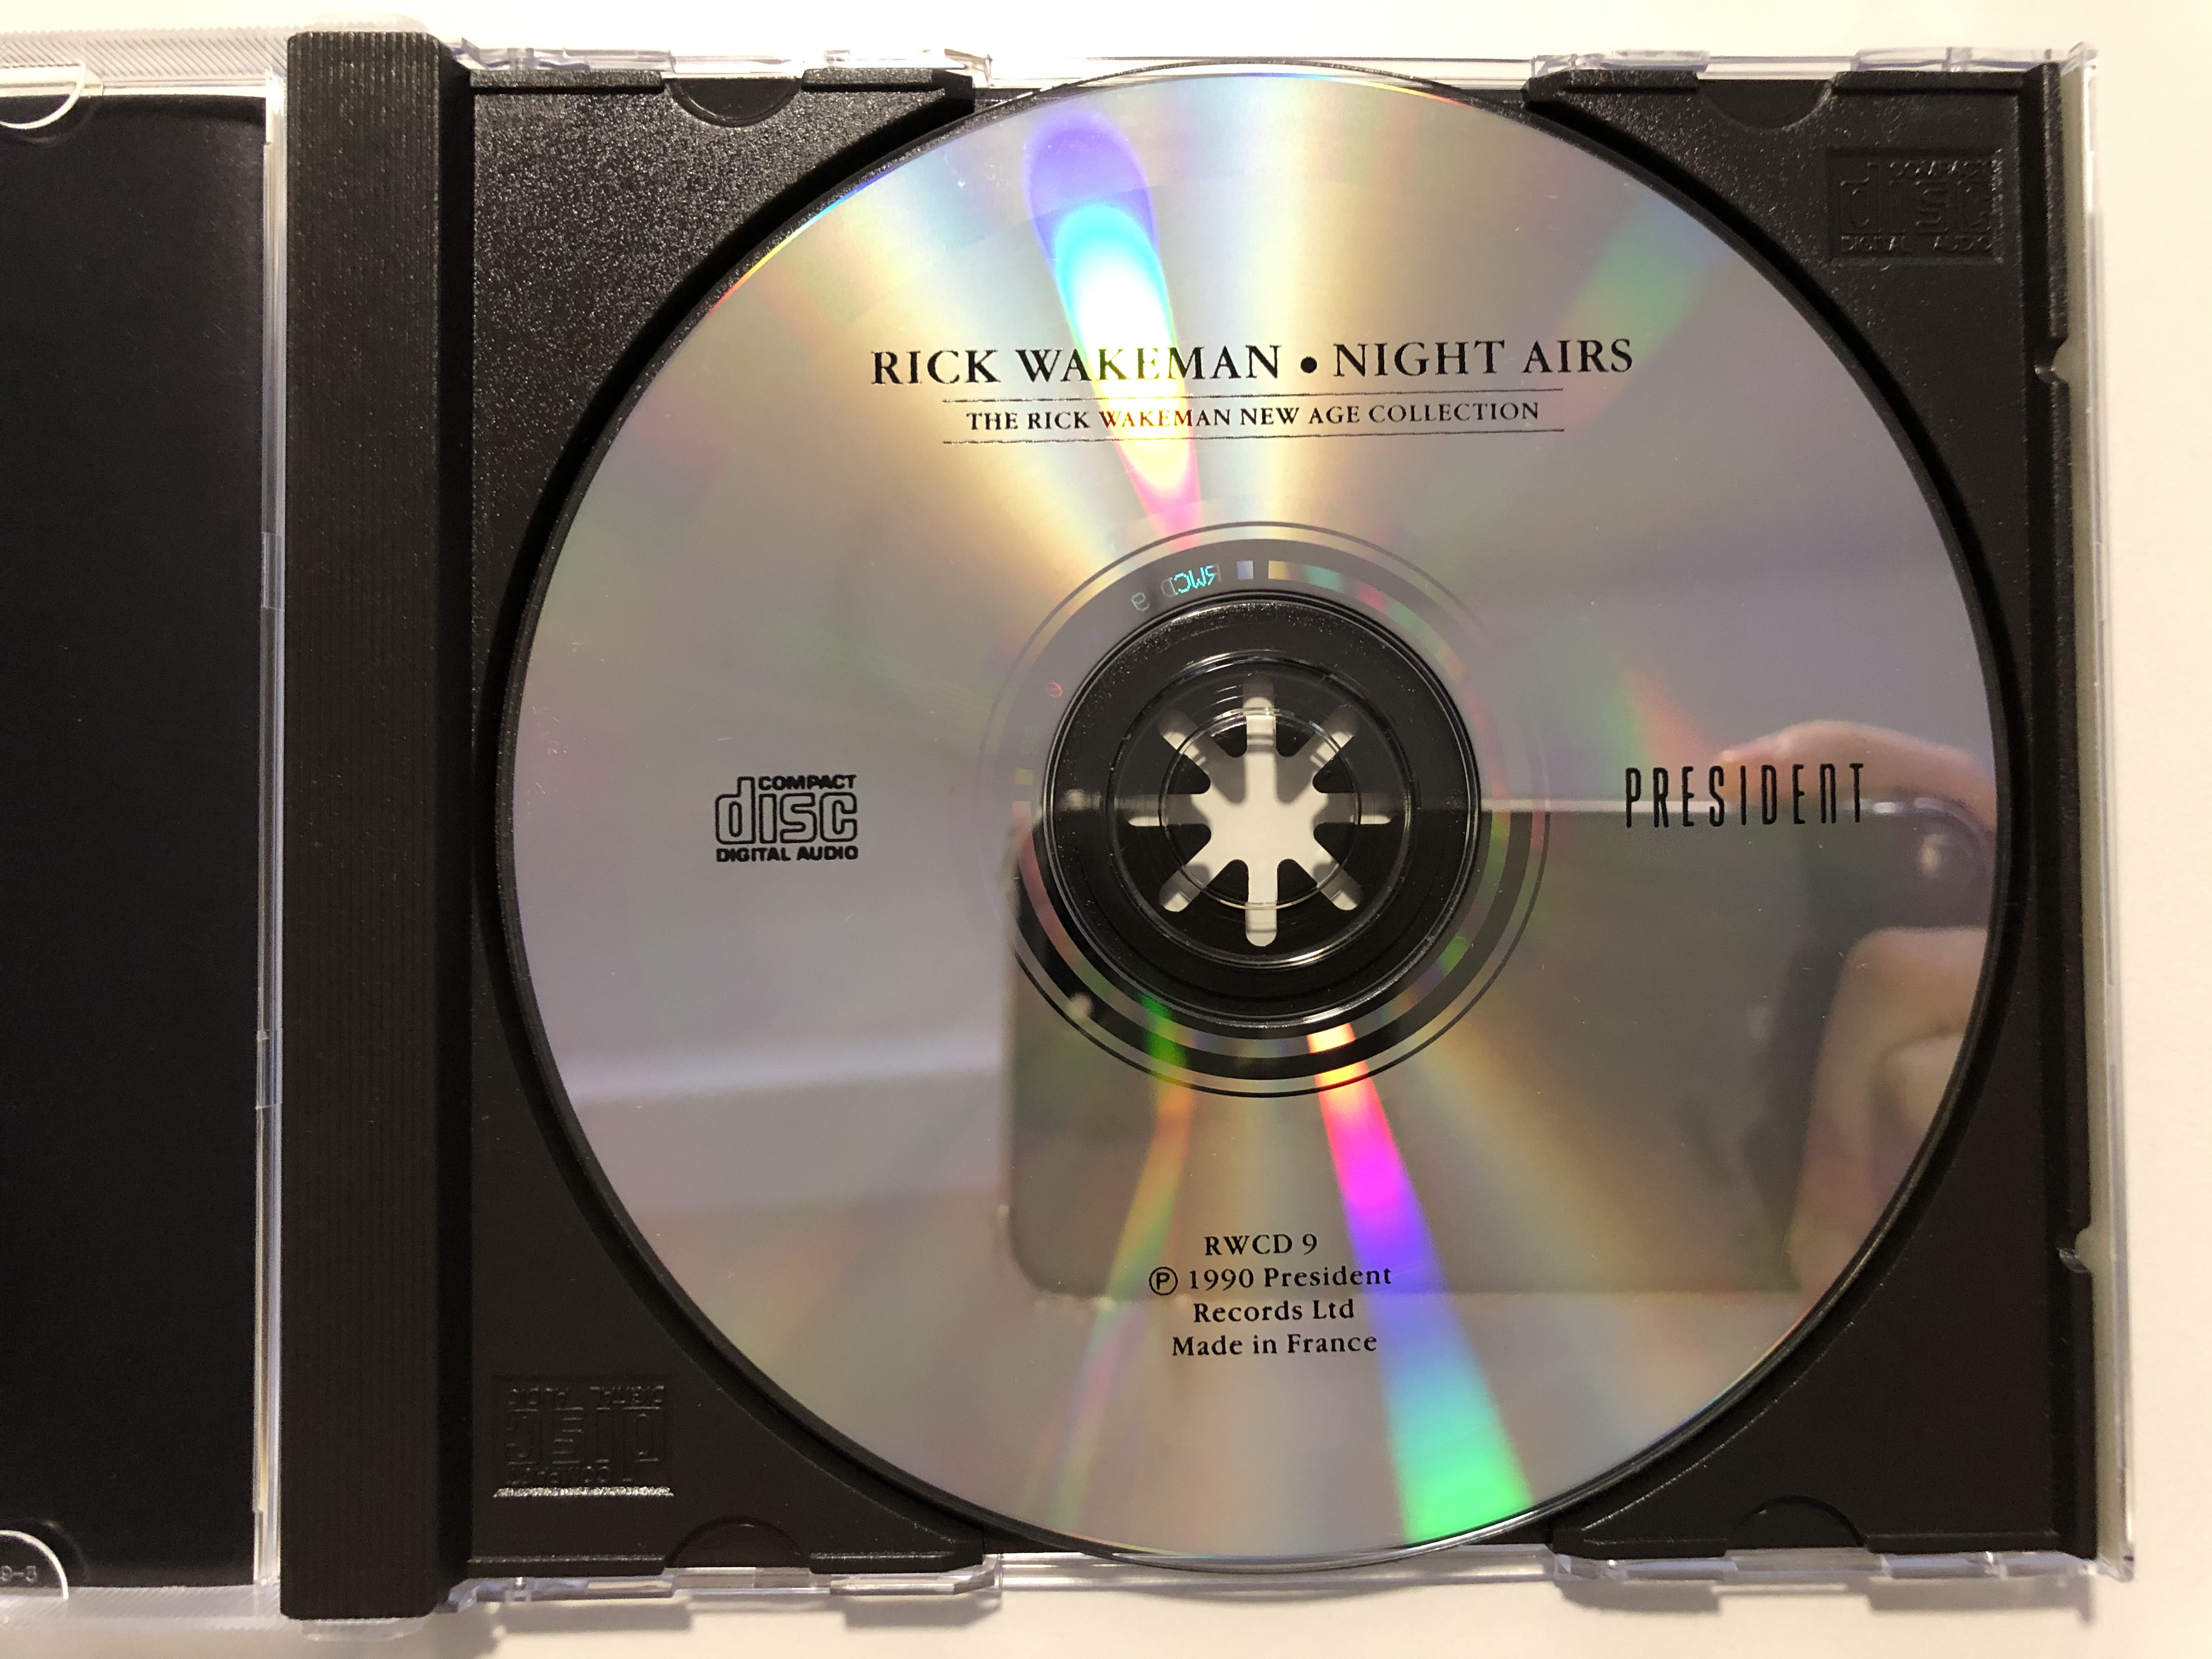 rick-wakeman-night-airs-the-rick-wakeman-new-age-collection-president-records-audio-cd-1990-rwcd-9-3-.jpg